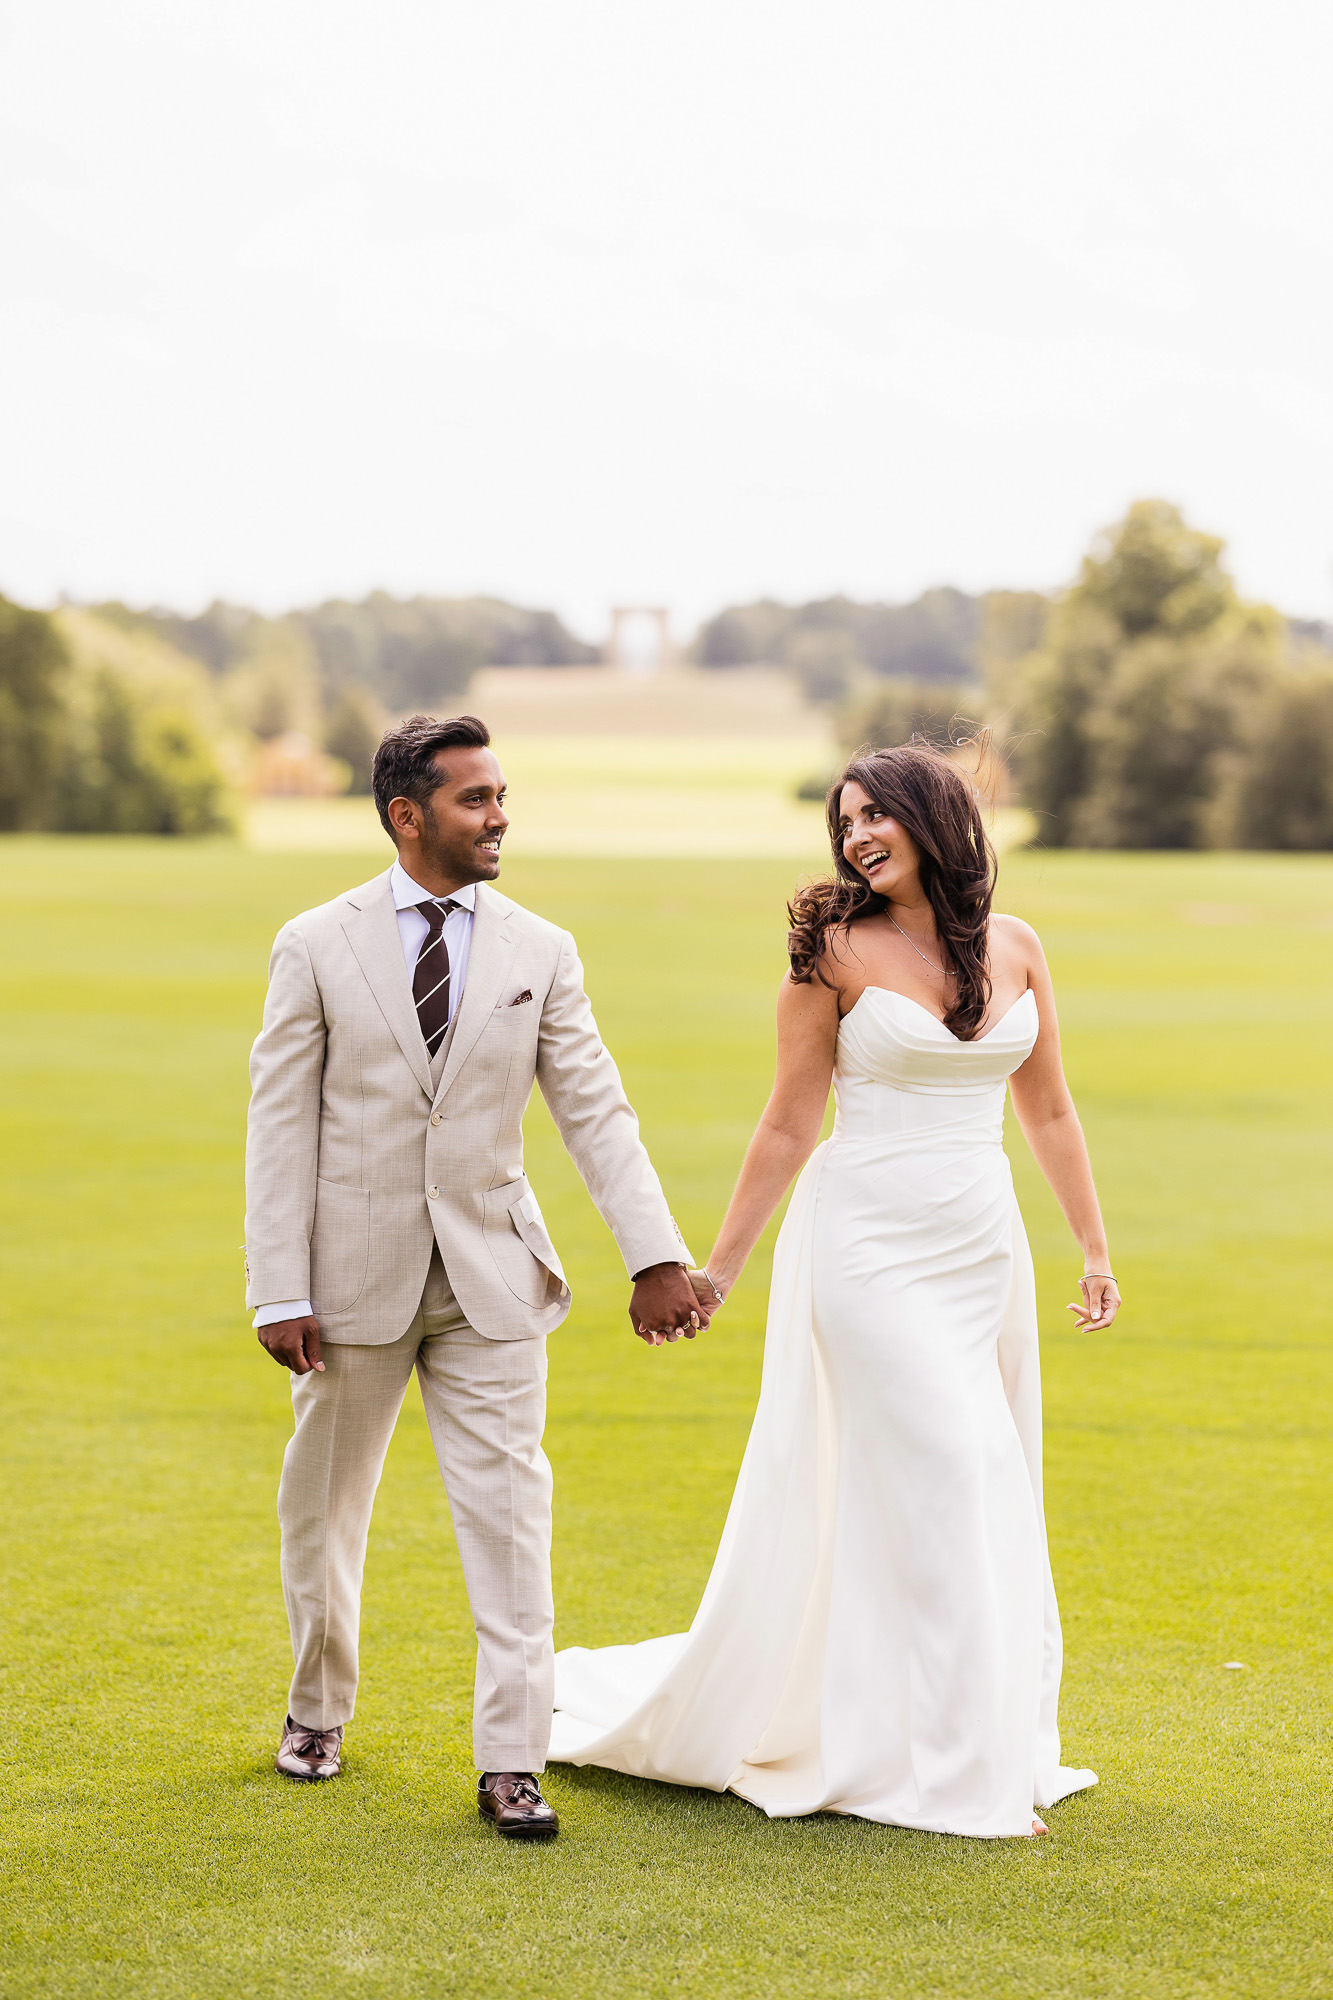 Stowe House, Civil Ceremony, Hindu Wedding, Multicultural Wedding Photographer, couples portraits